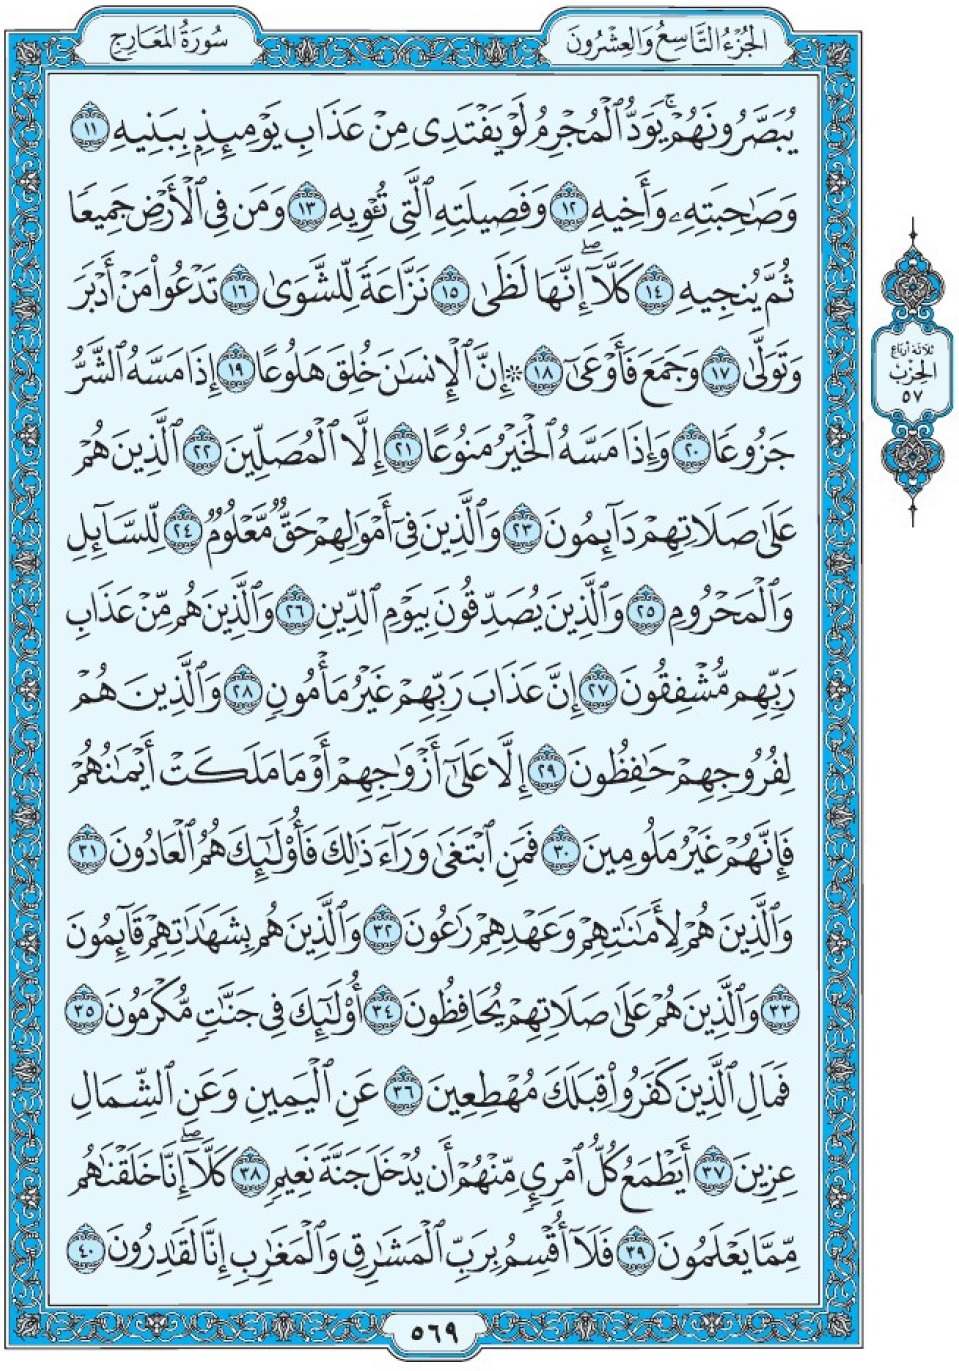 Коран Мединский мусхаф страница 569, сура аль-Ма‘аридж аят 11-40